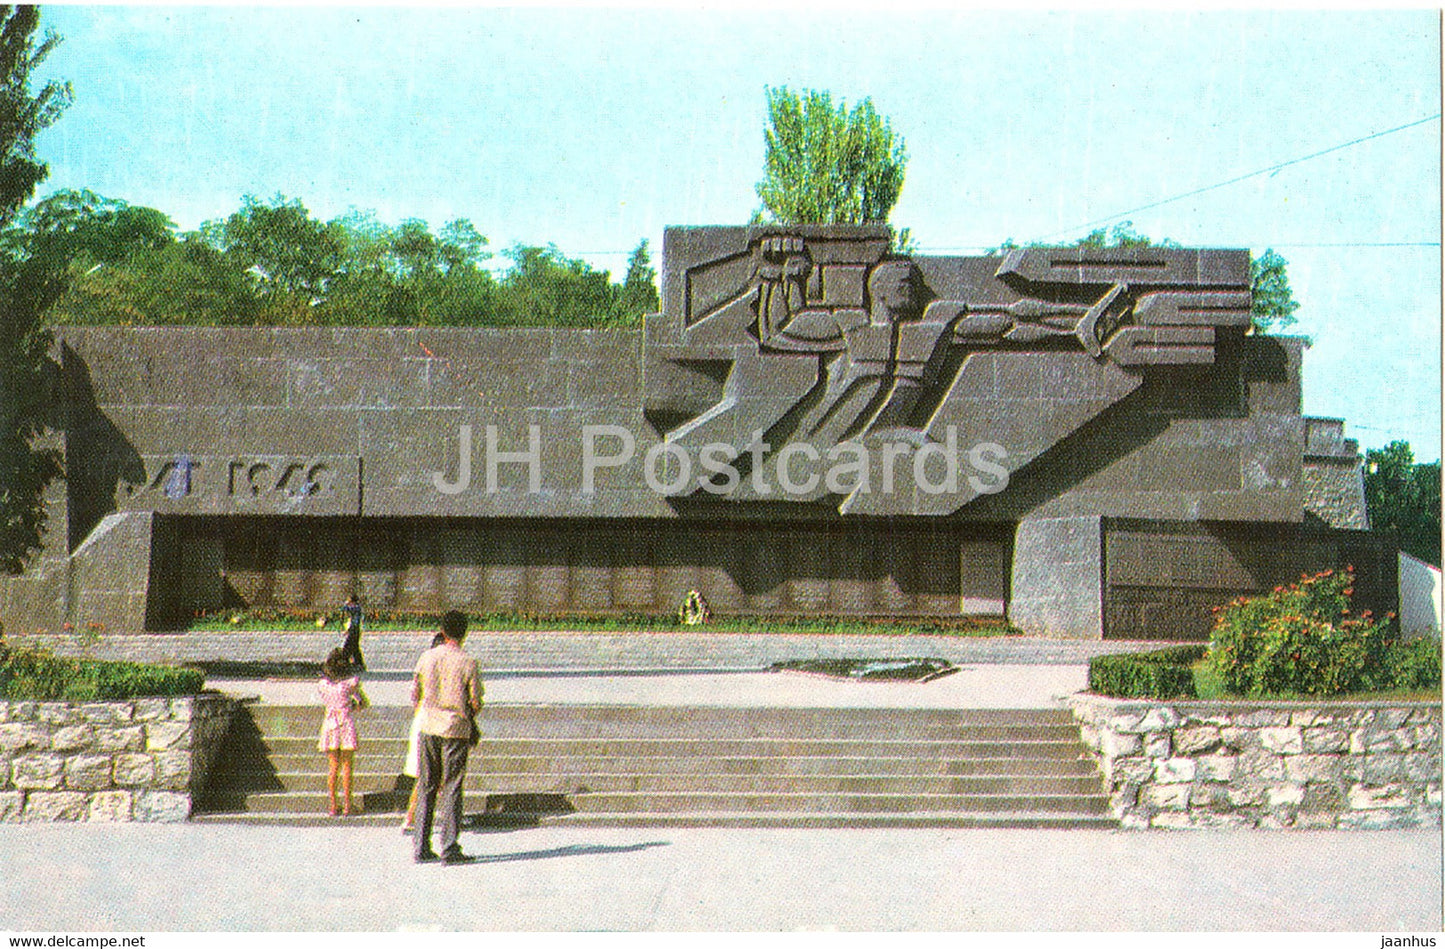 Sevastopol - memorial wall dedicated to the defense of the city - Crimea - 1975 - Ukraine USSR - unused - JH Postcards